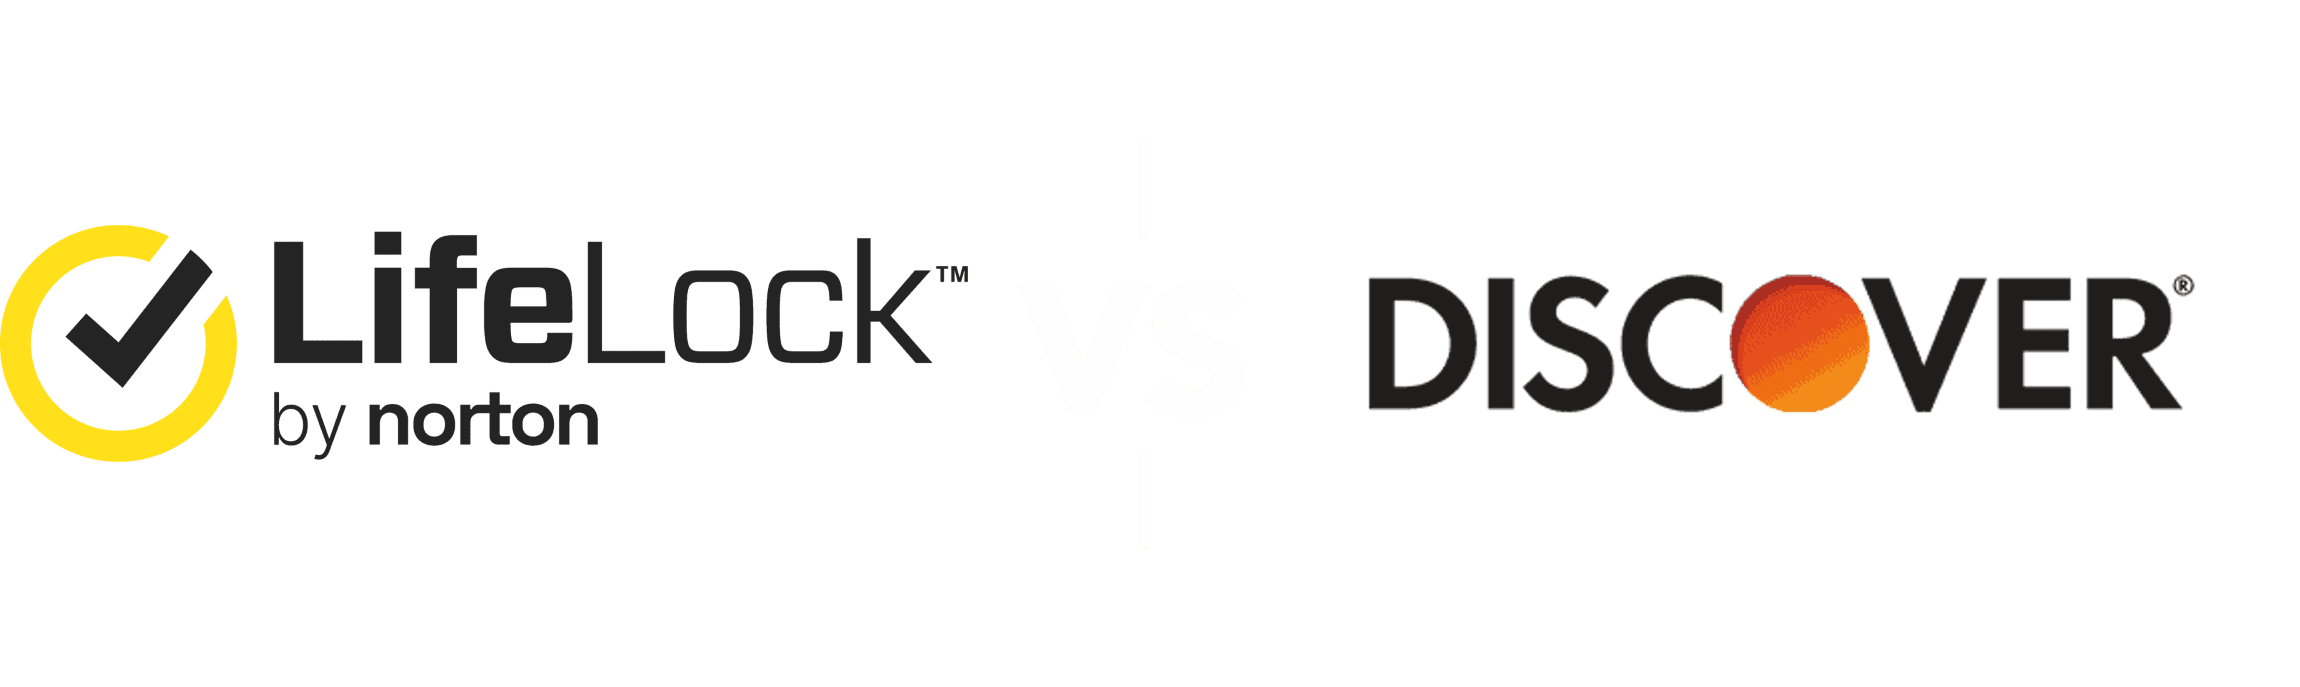 LifeLock vs Discover Identity Theft Protection Comparison